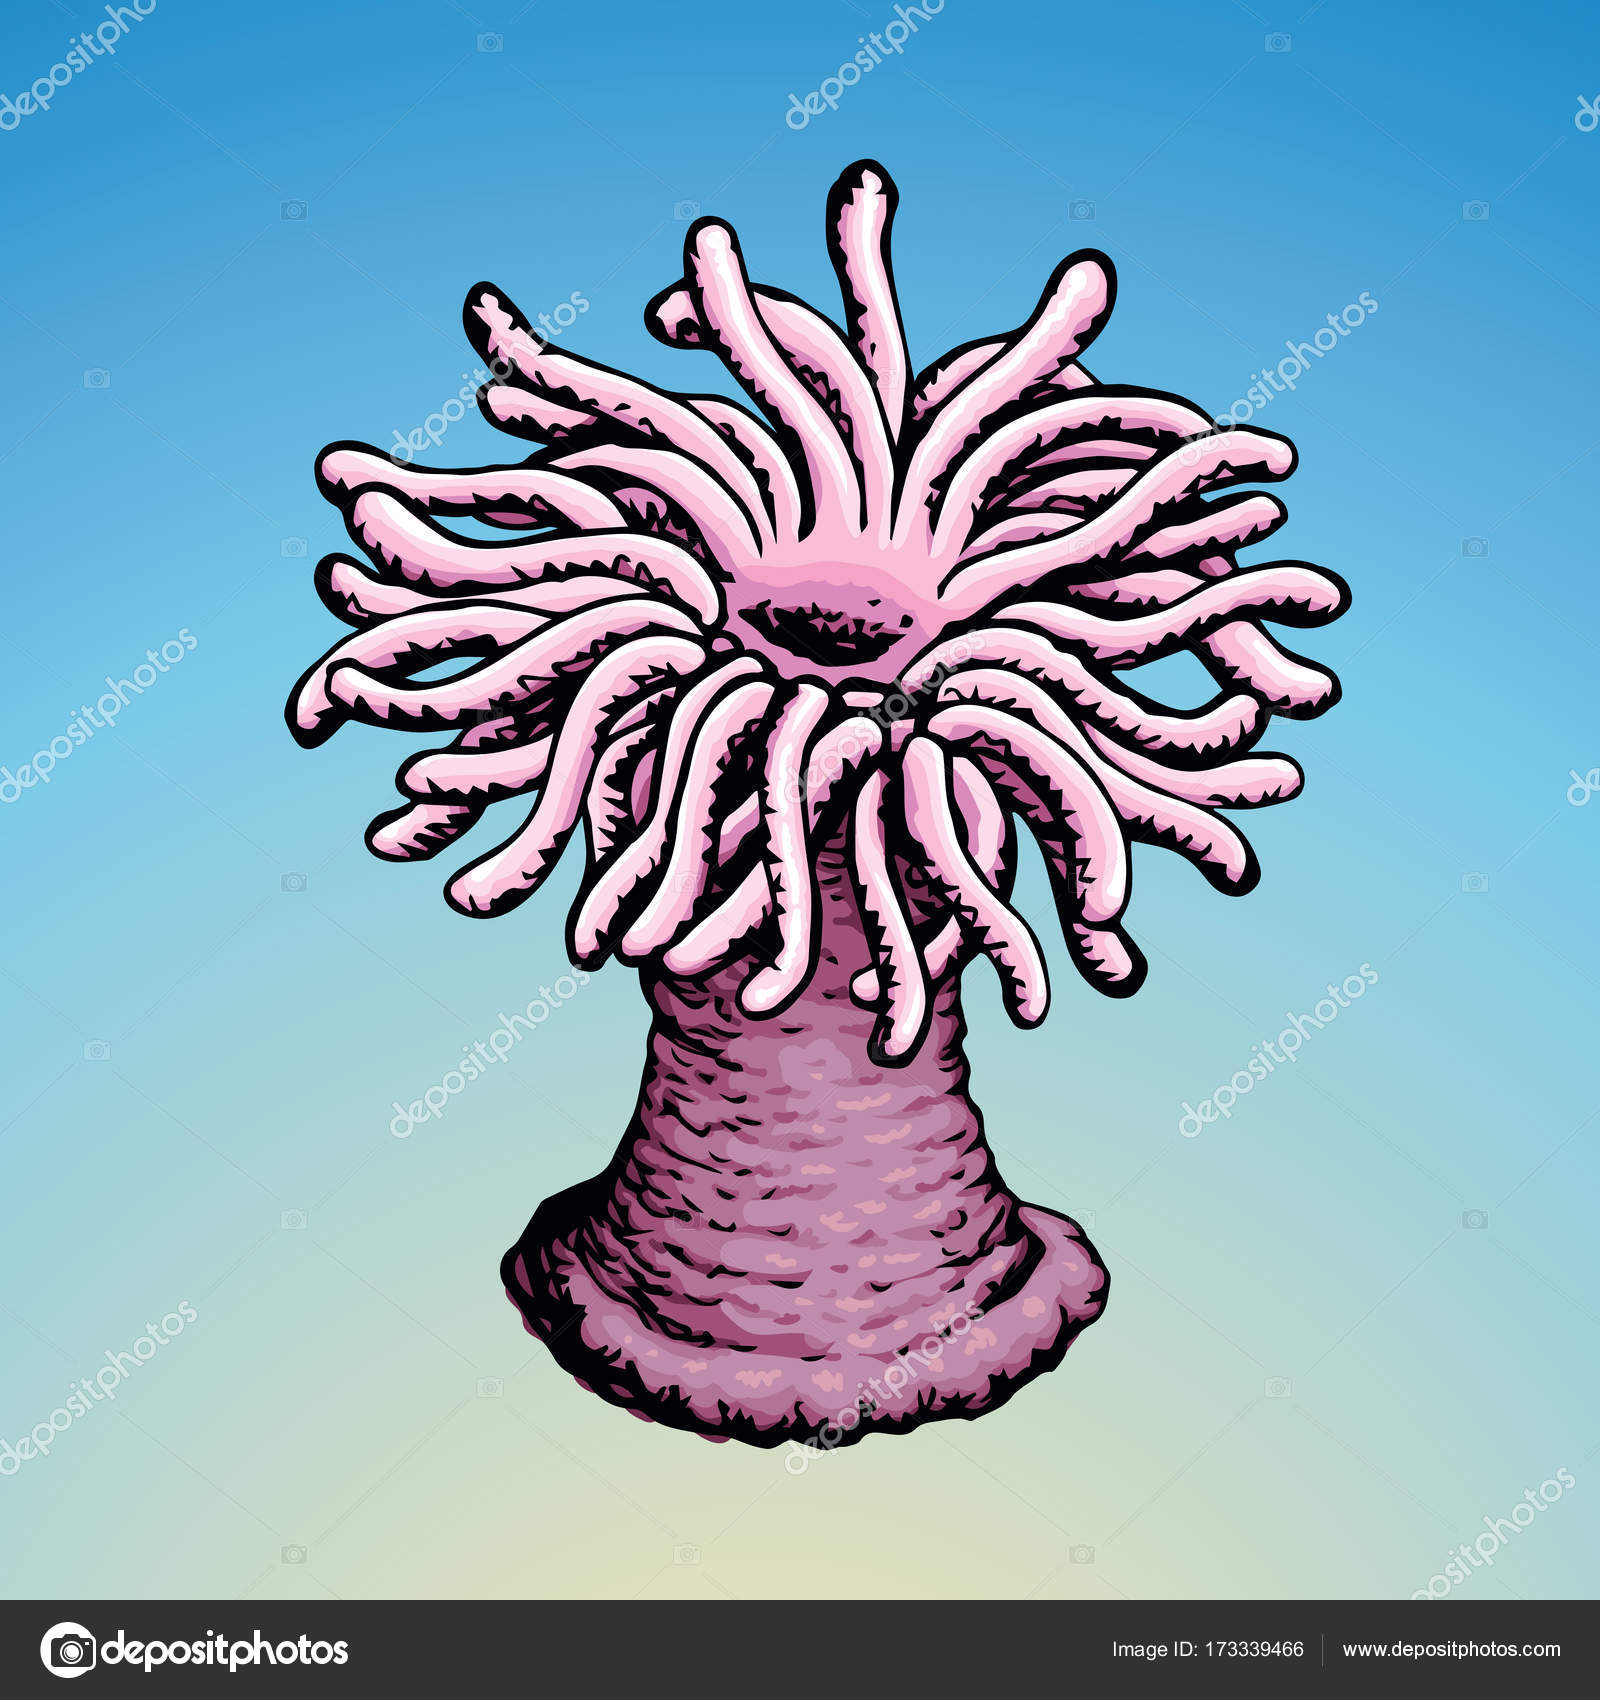 Sea Anemone Drawing at GetDrawings | Free download